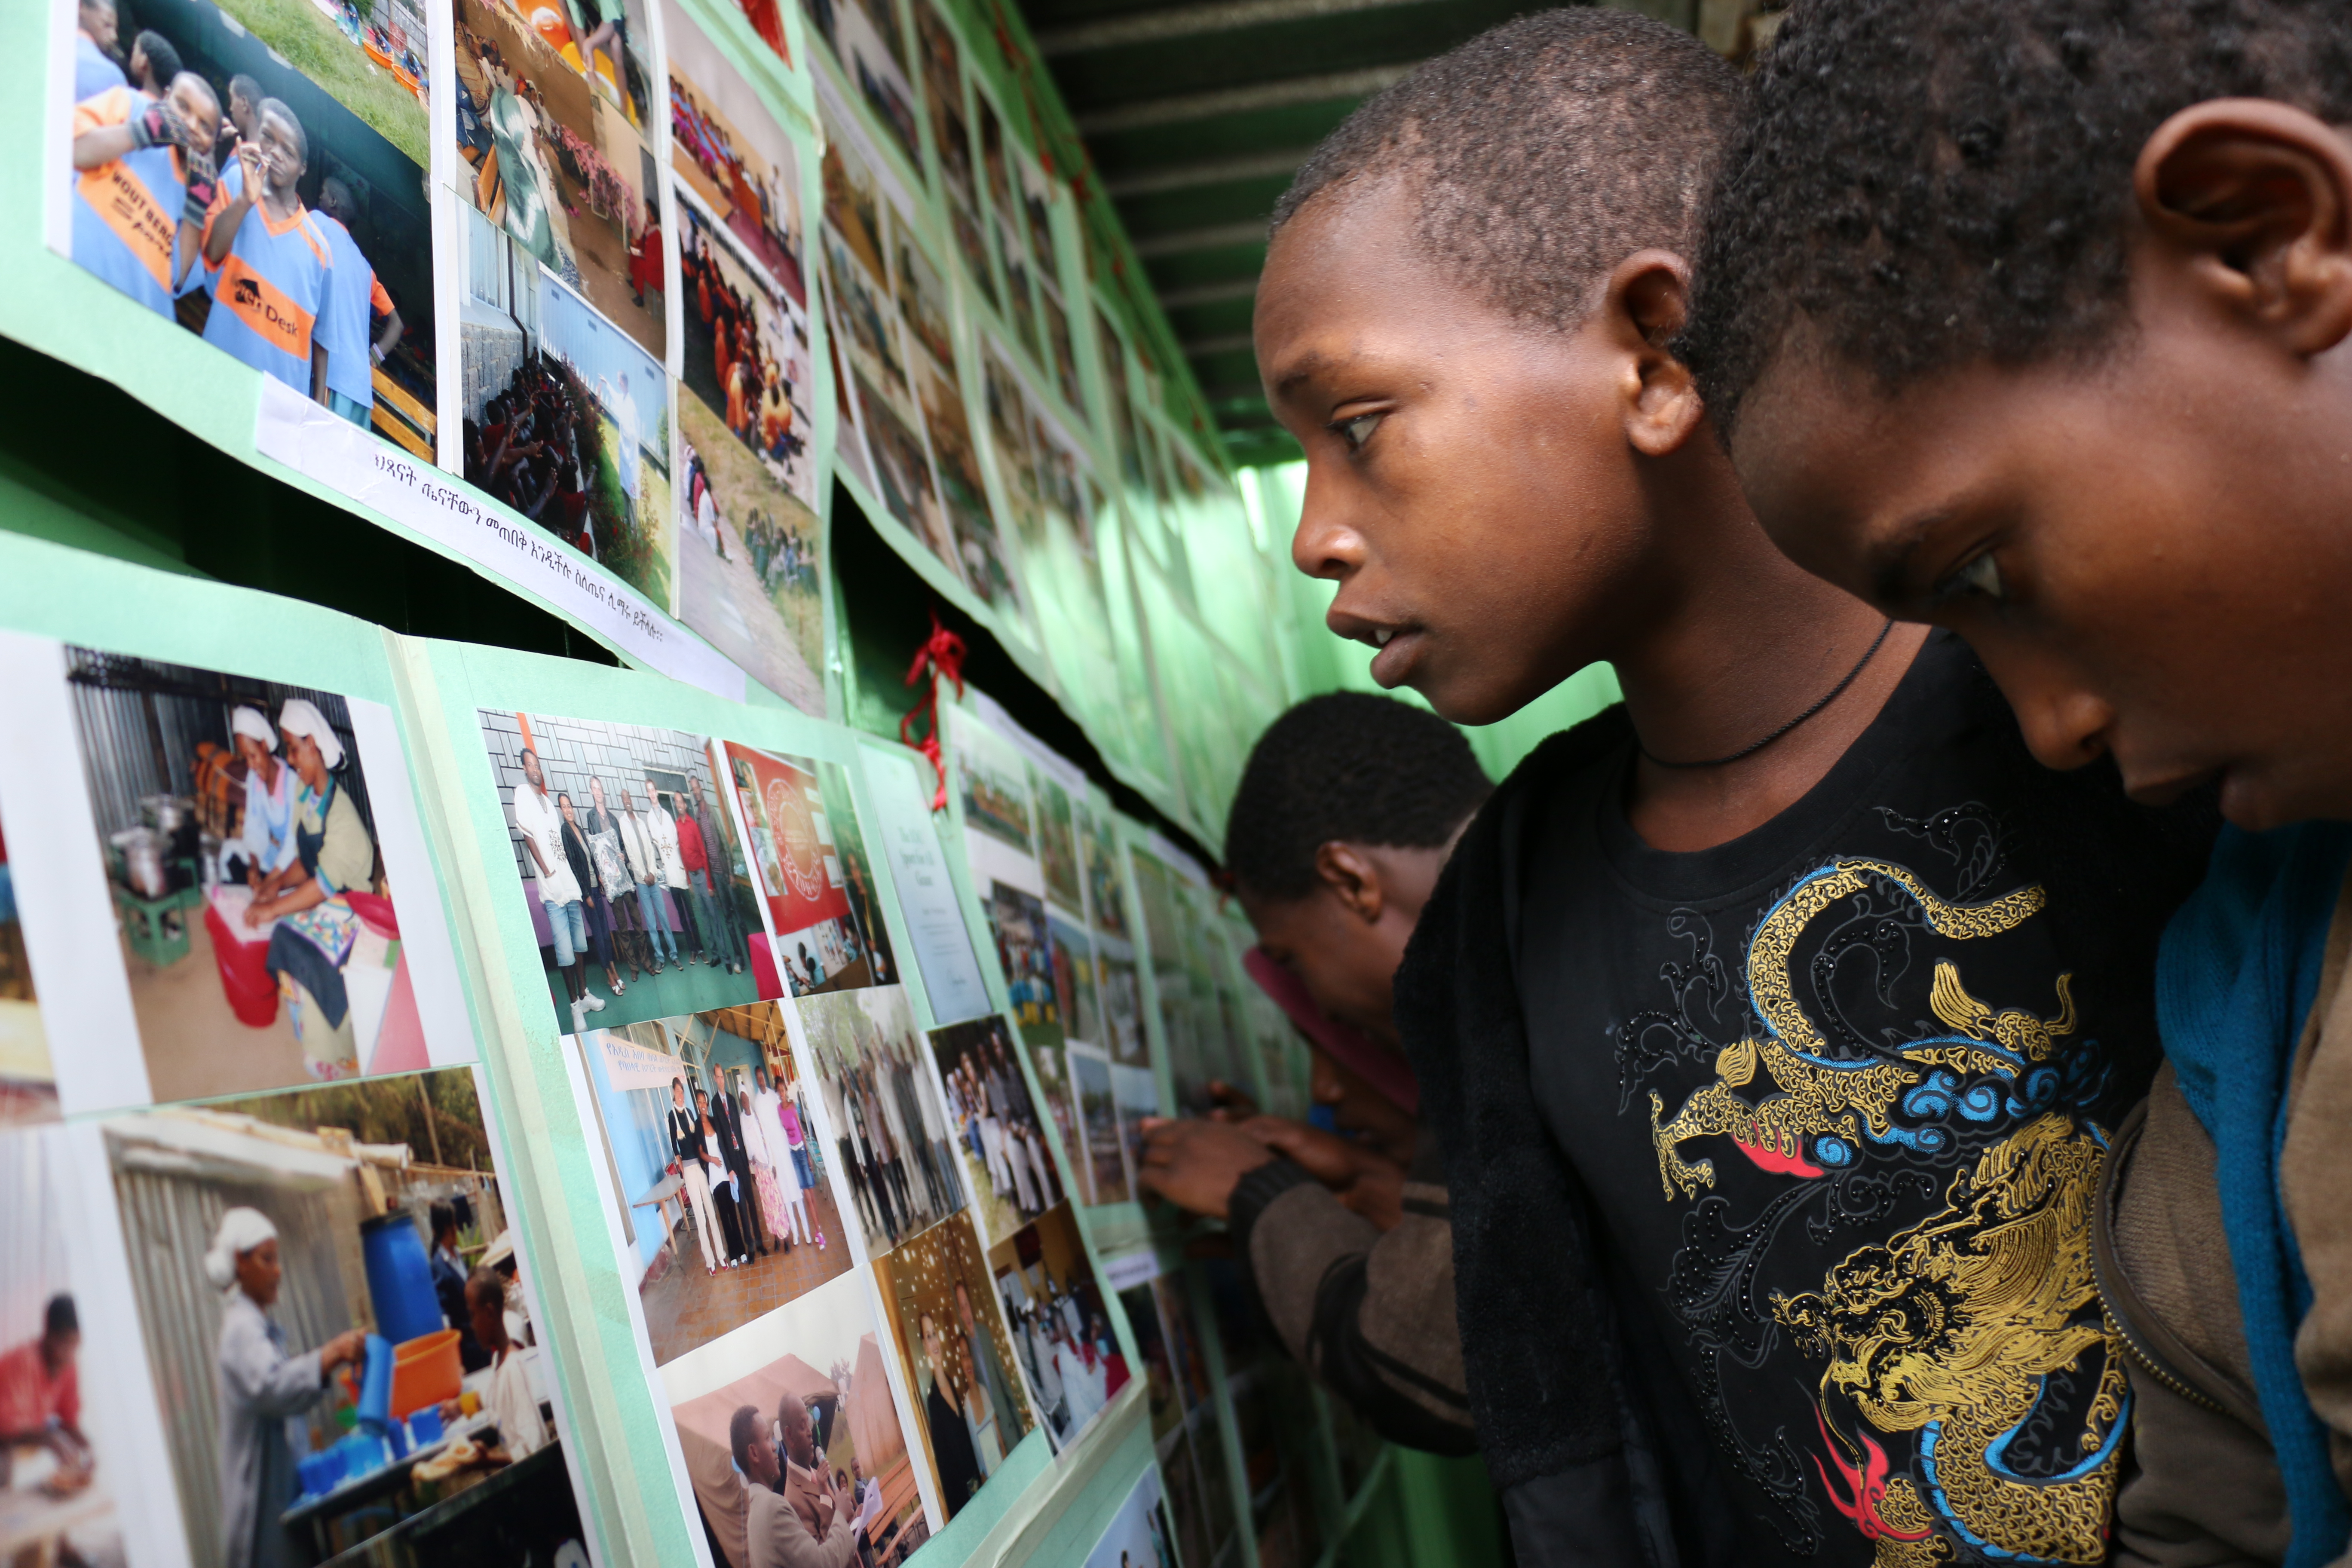 Follow up children (former street children) looking at 10 year photo exhibition